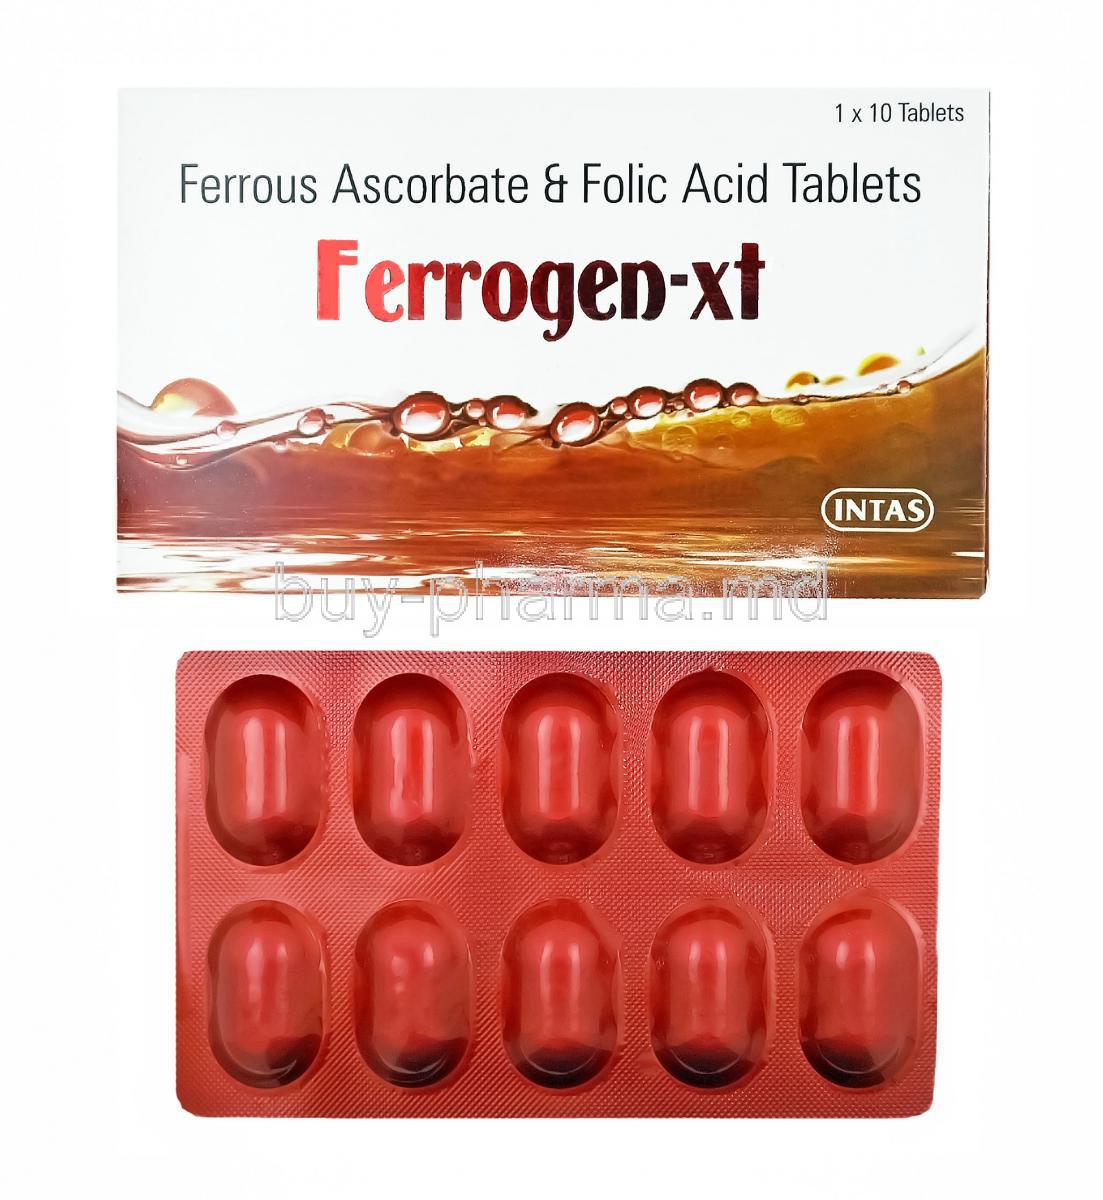 Ferrogen - XT, Elemental Iron and Folic Acid